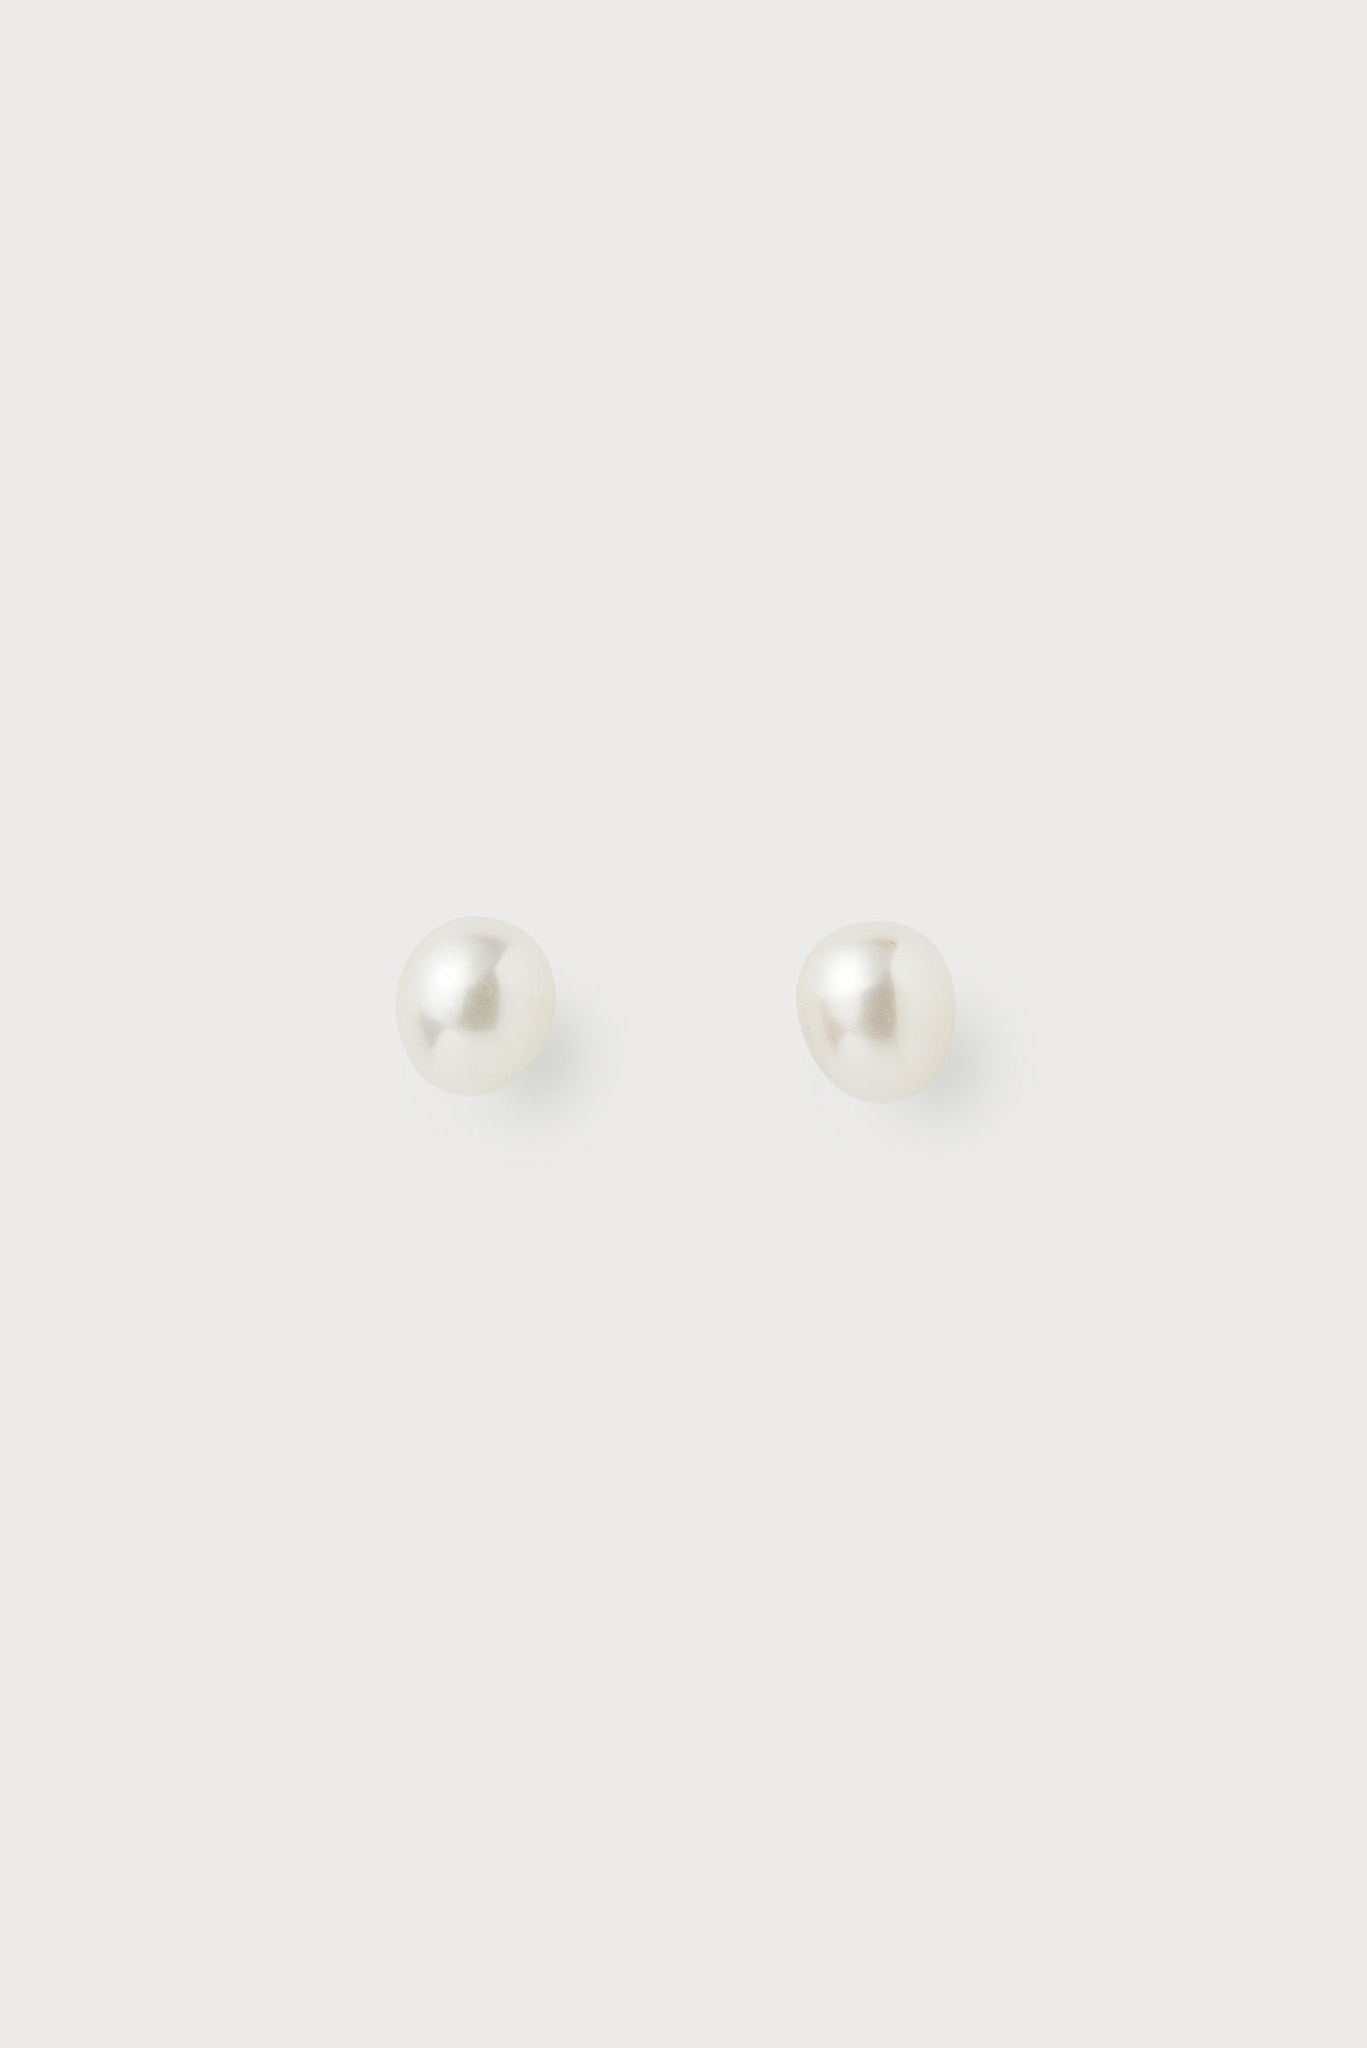 Oval Pearl Earrings, Small